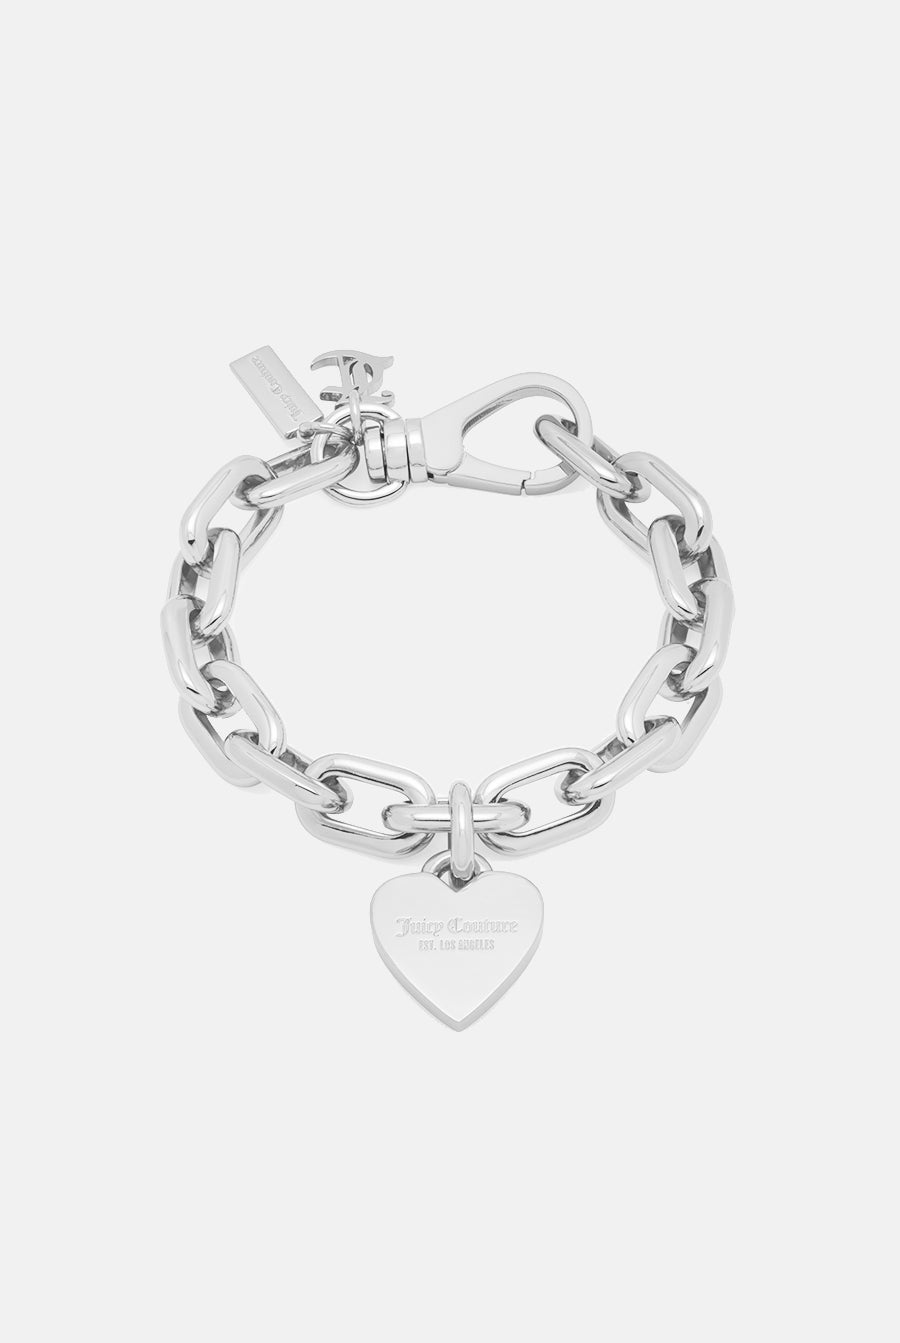 LOT534  TIFFANY  CO  a silver Return to Tiffany belcherlink necklace  and bracelet